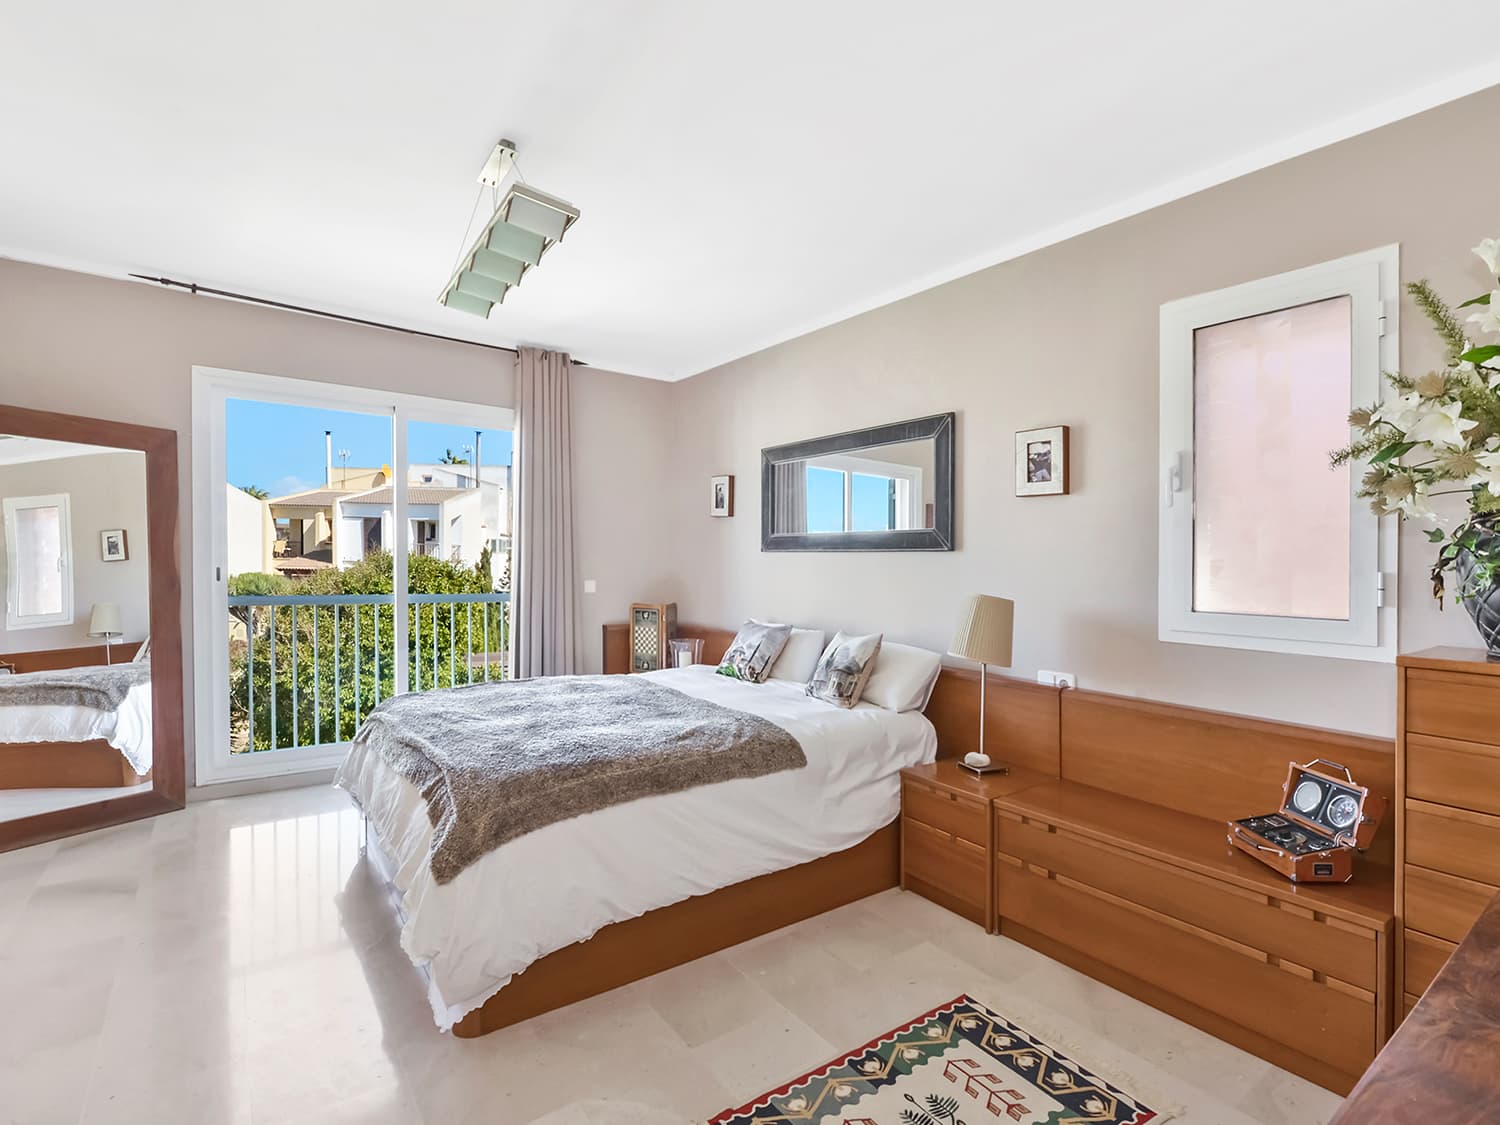 Casa en Badia Blava con vistas al mar destacada - Venta casa Mallorca